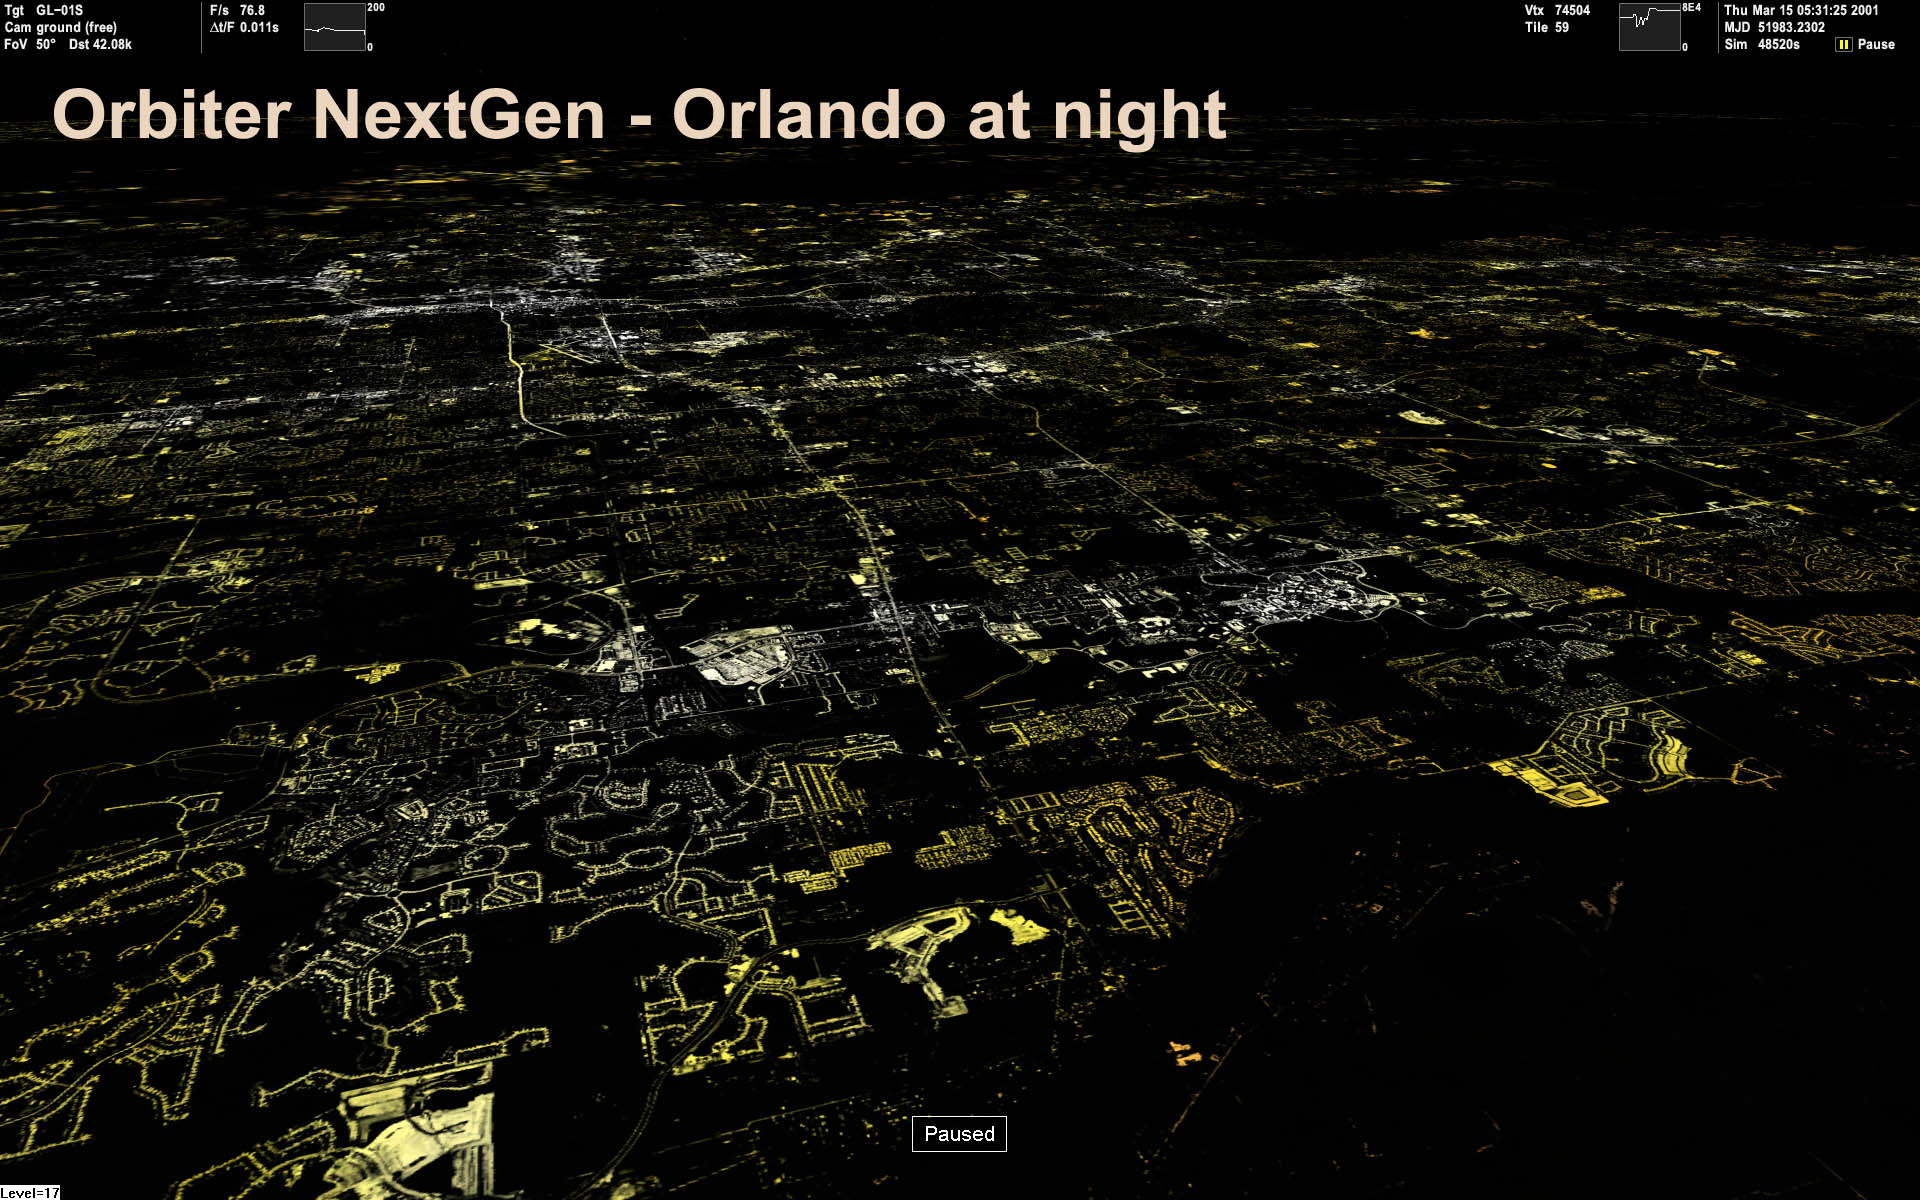 Orlando at night: Orbiter NextGen with new planet renderer.